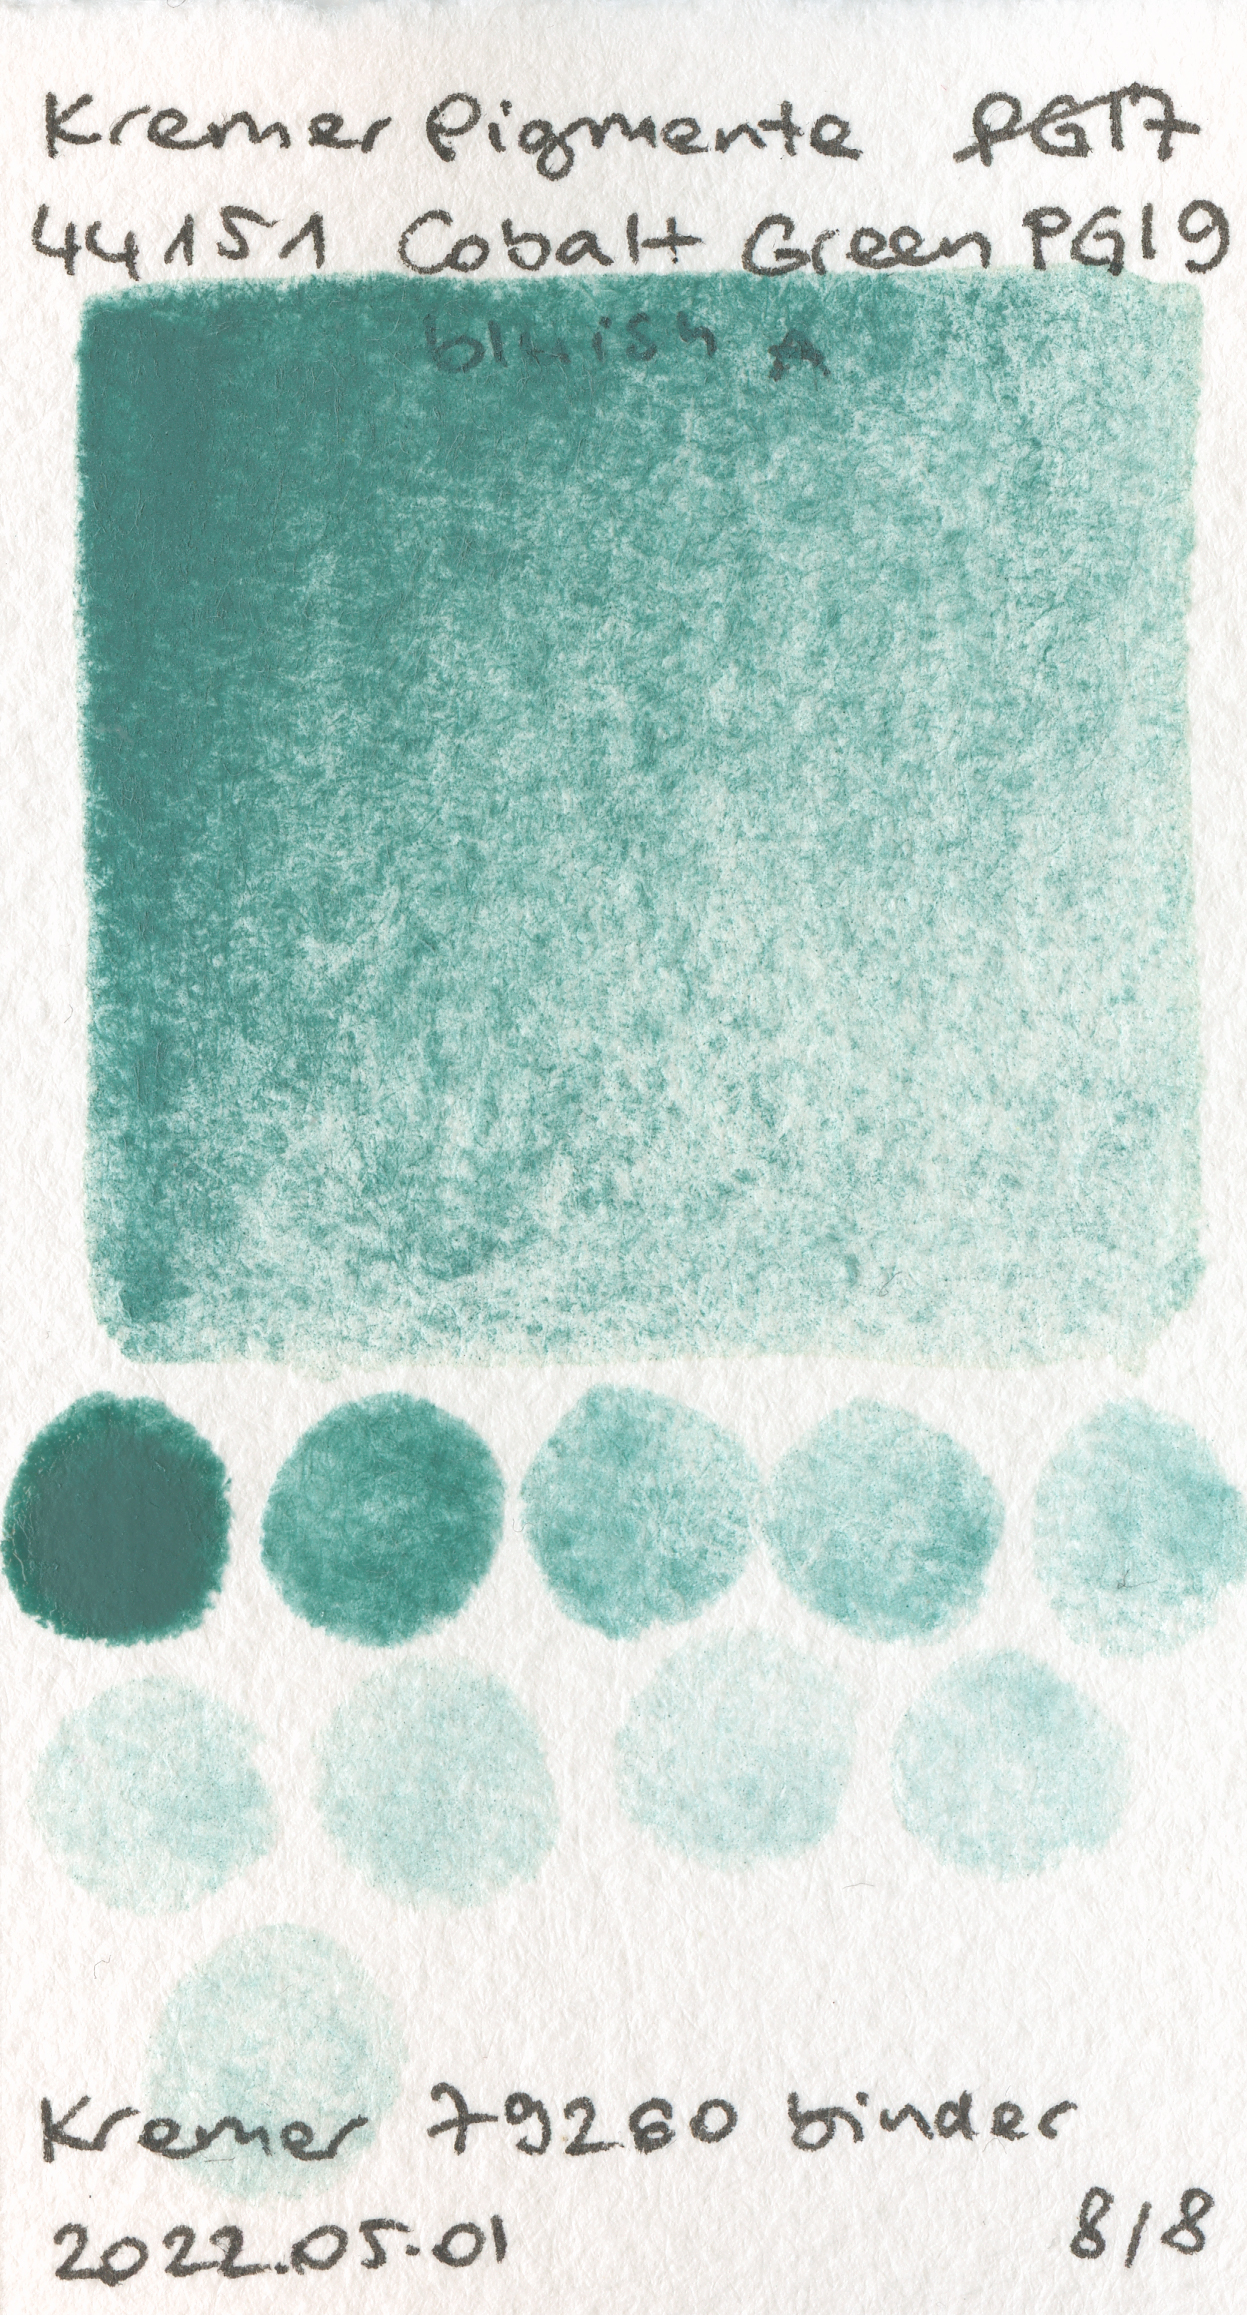 Kremer Pigmente [Dry] Pigments 44151 Cobalt Green bluish A PG19 watercolor swatch